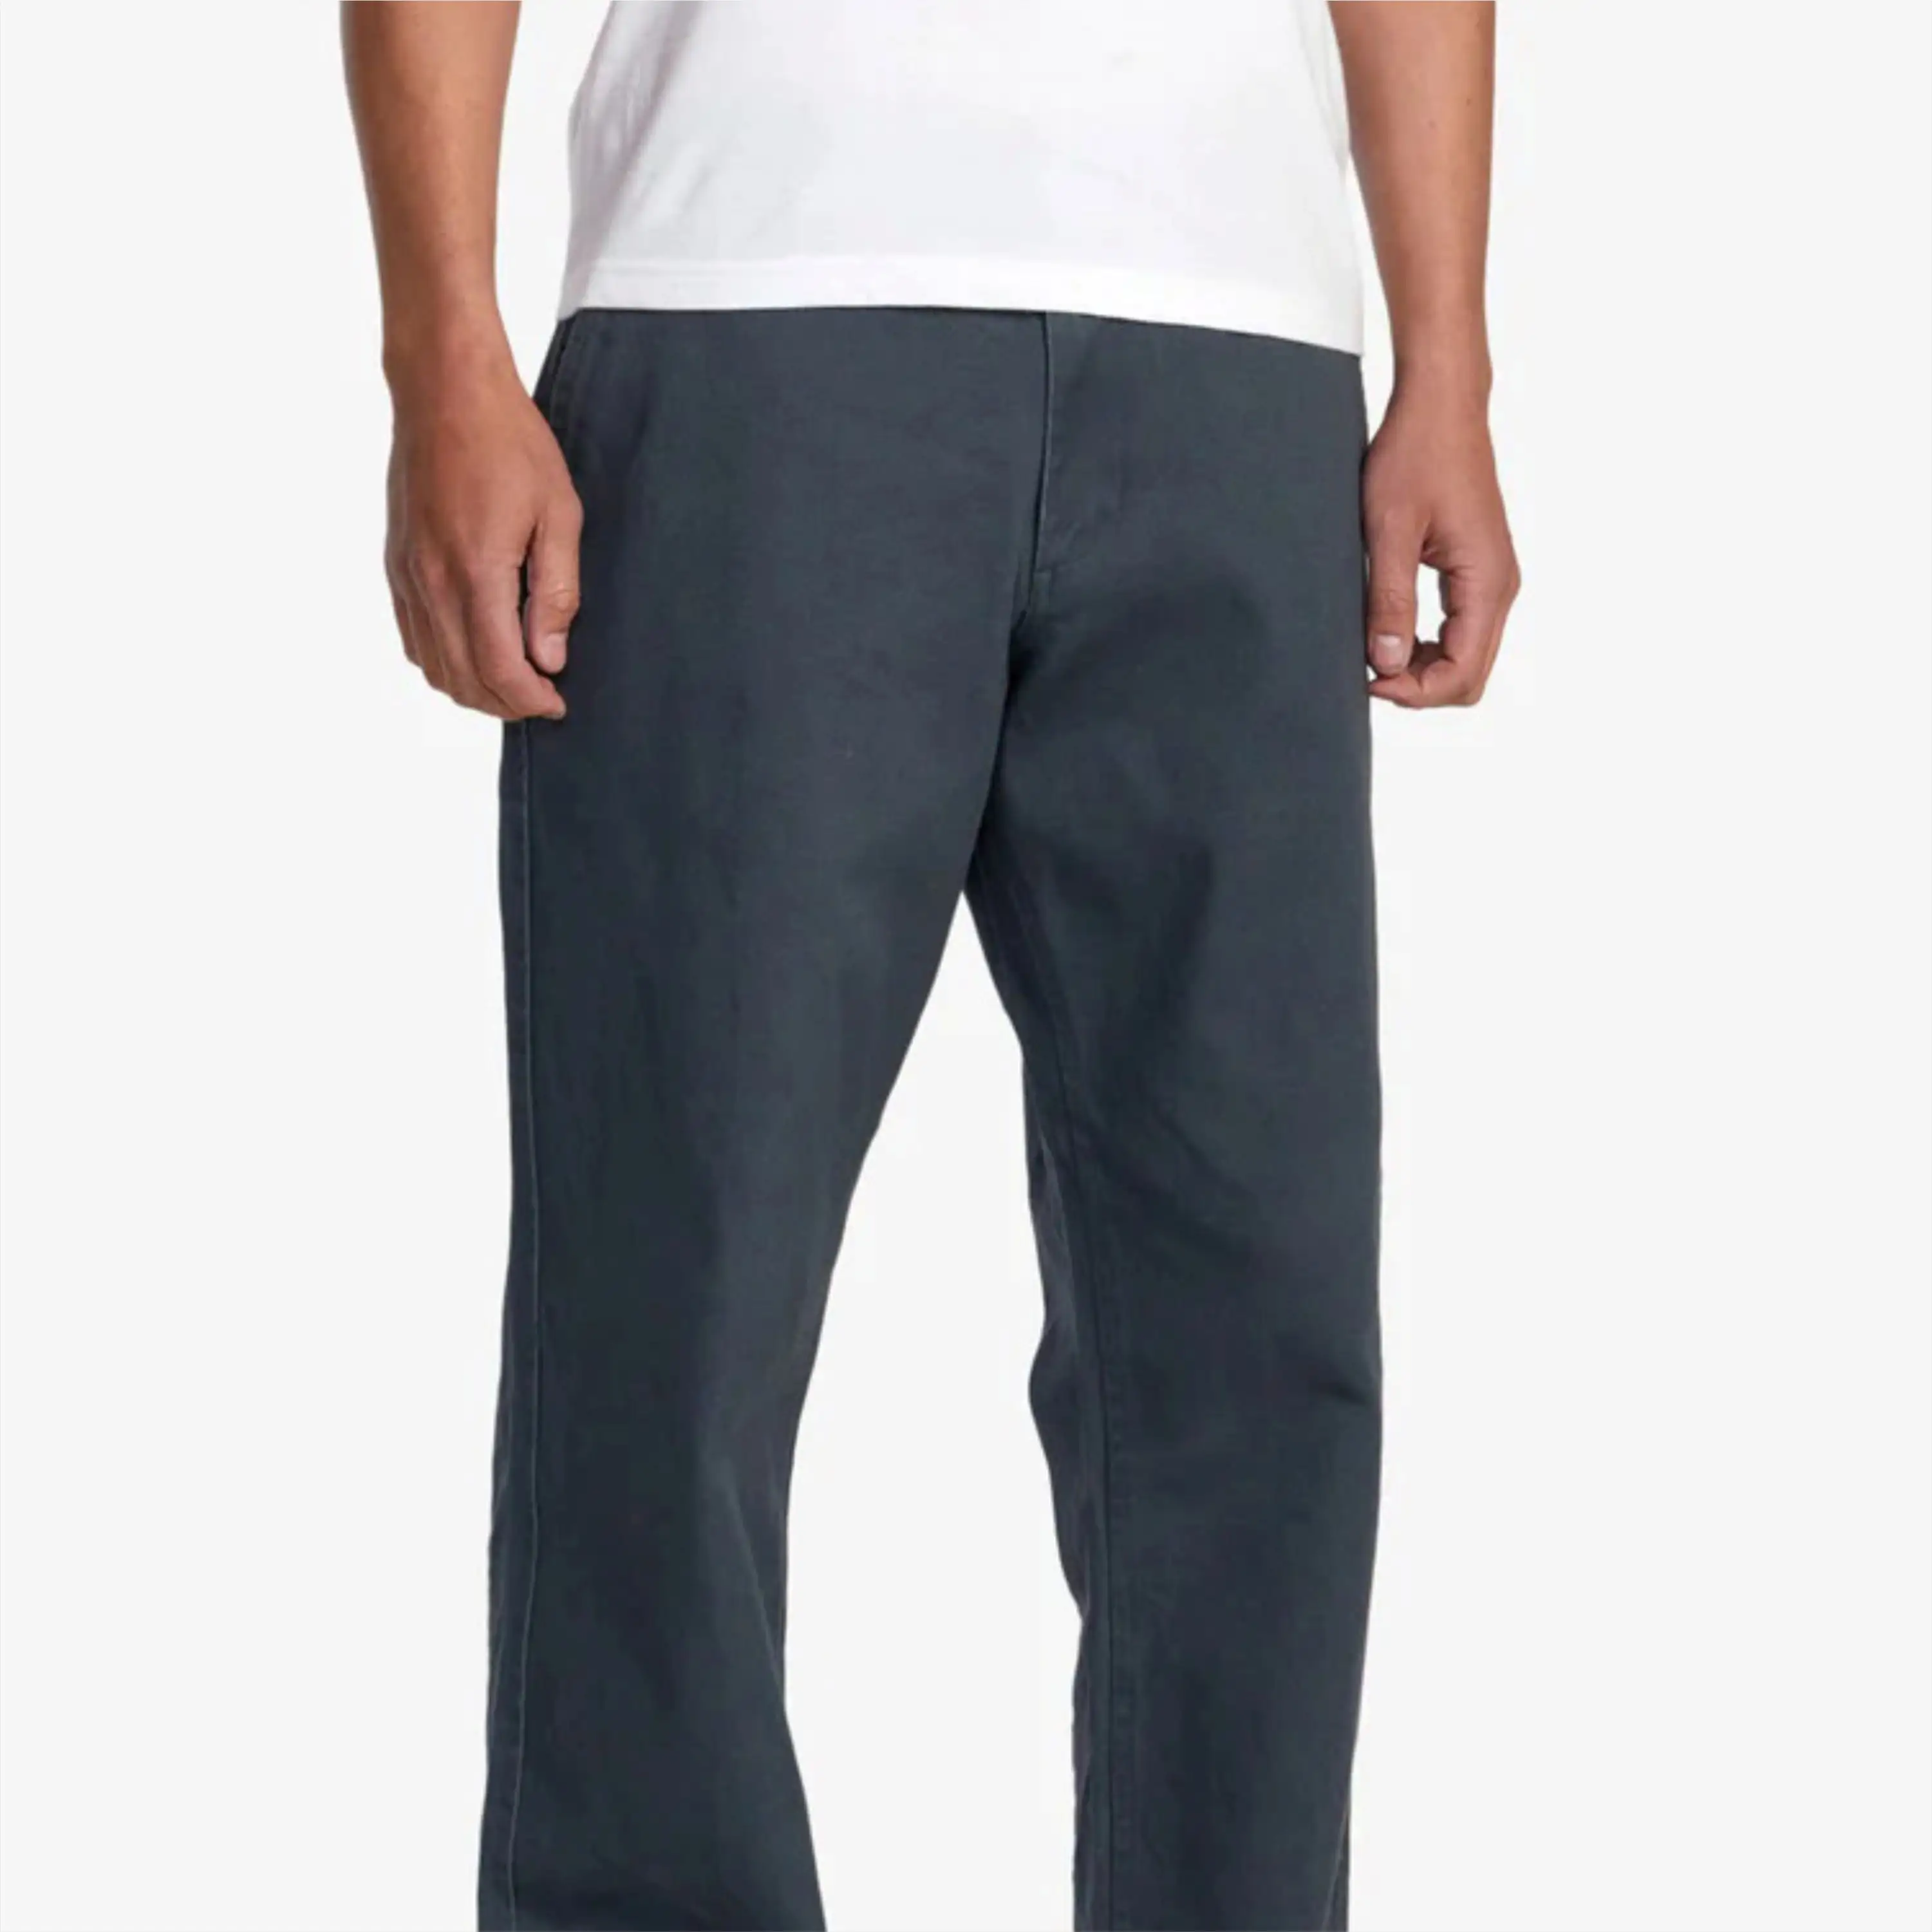 Celana Chino katun peregangan pria-ringan dan tahan lama, cocok untuk bekerja, akhir pekan, dan pakaian kasual